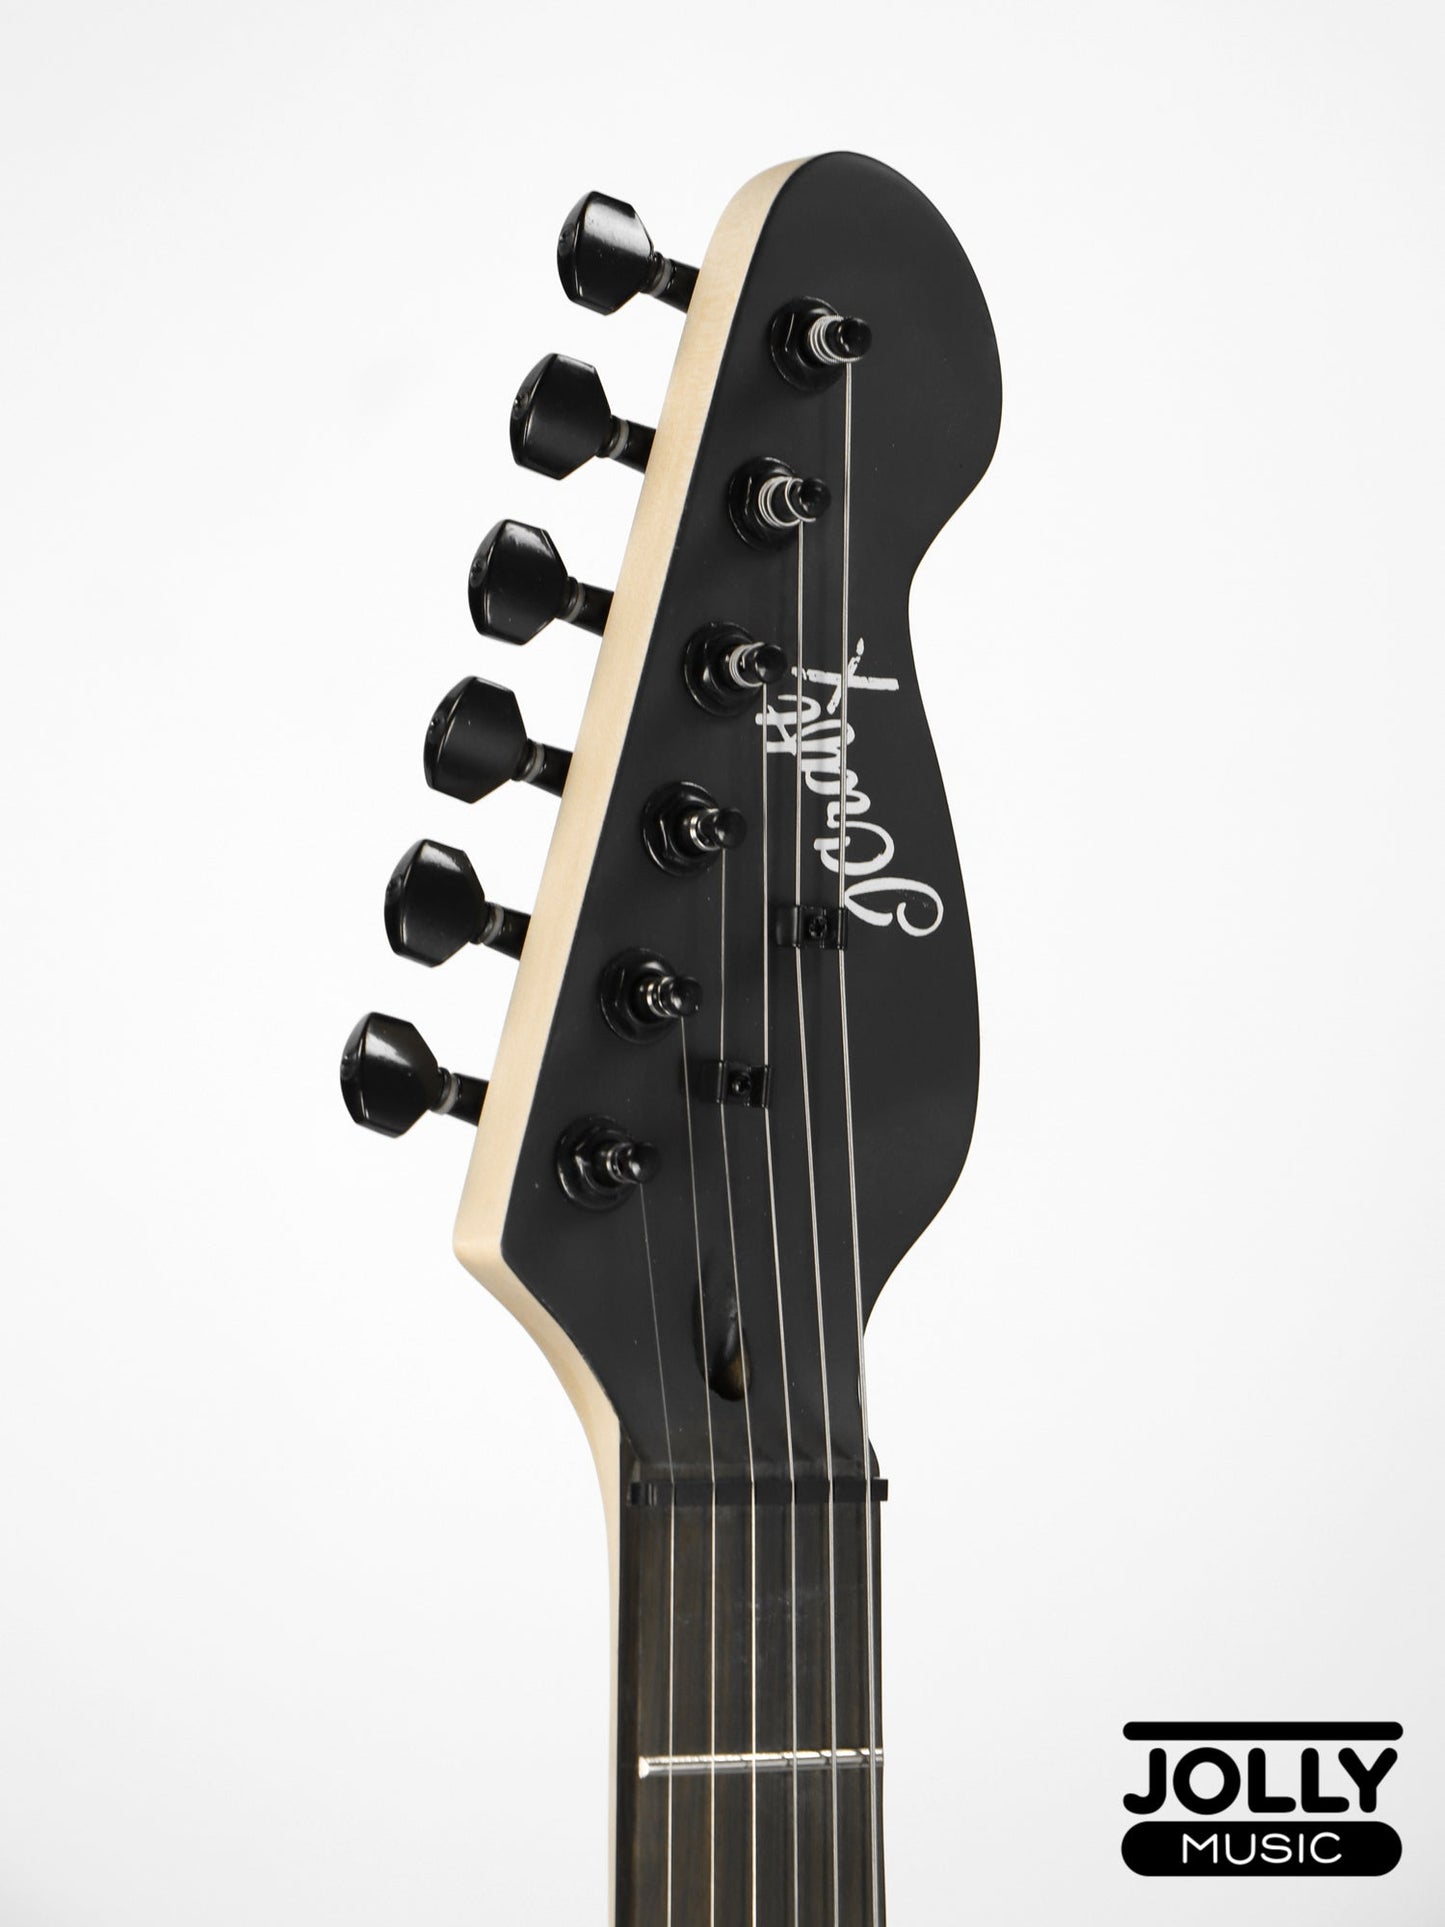 JCraft X Series LSX-1 LEFT HAND HH Modern S-Style Electric Guitar - Lockdown Red Ltd. Ed.